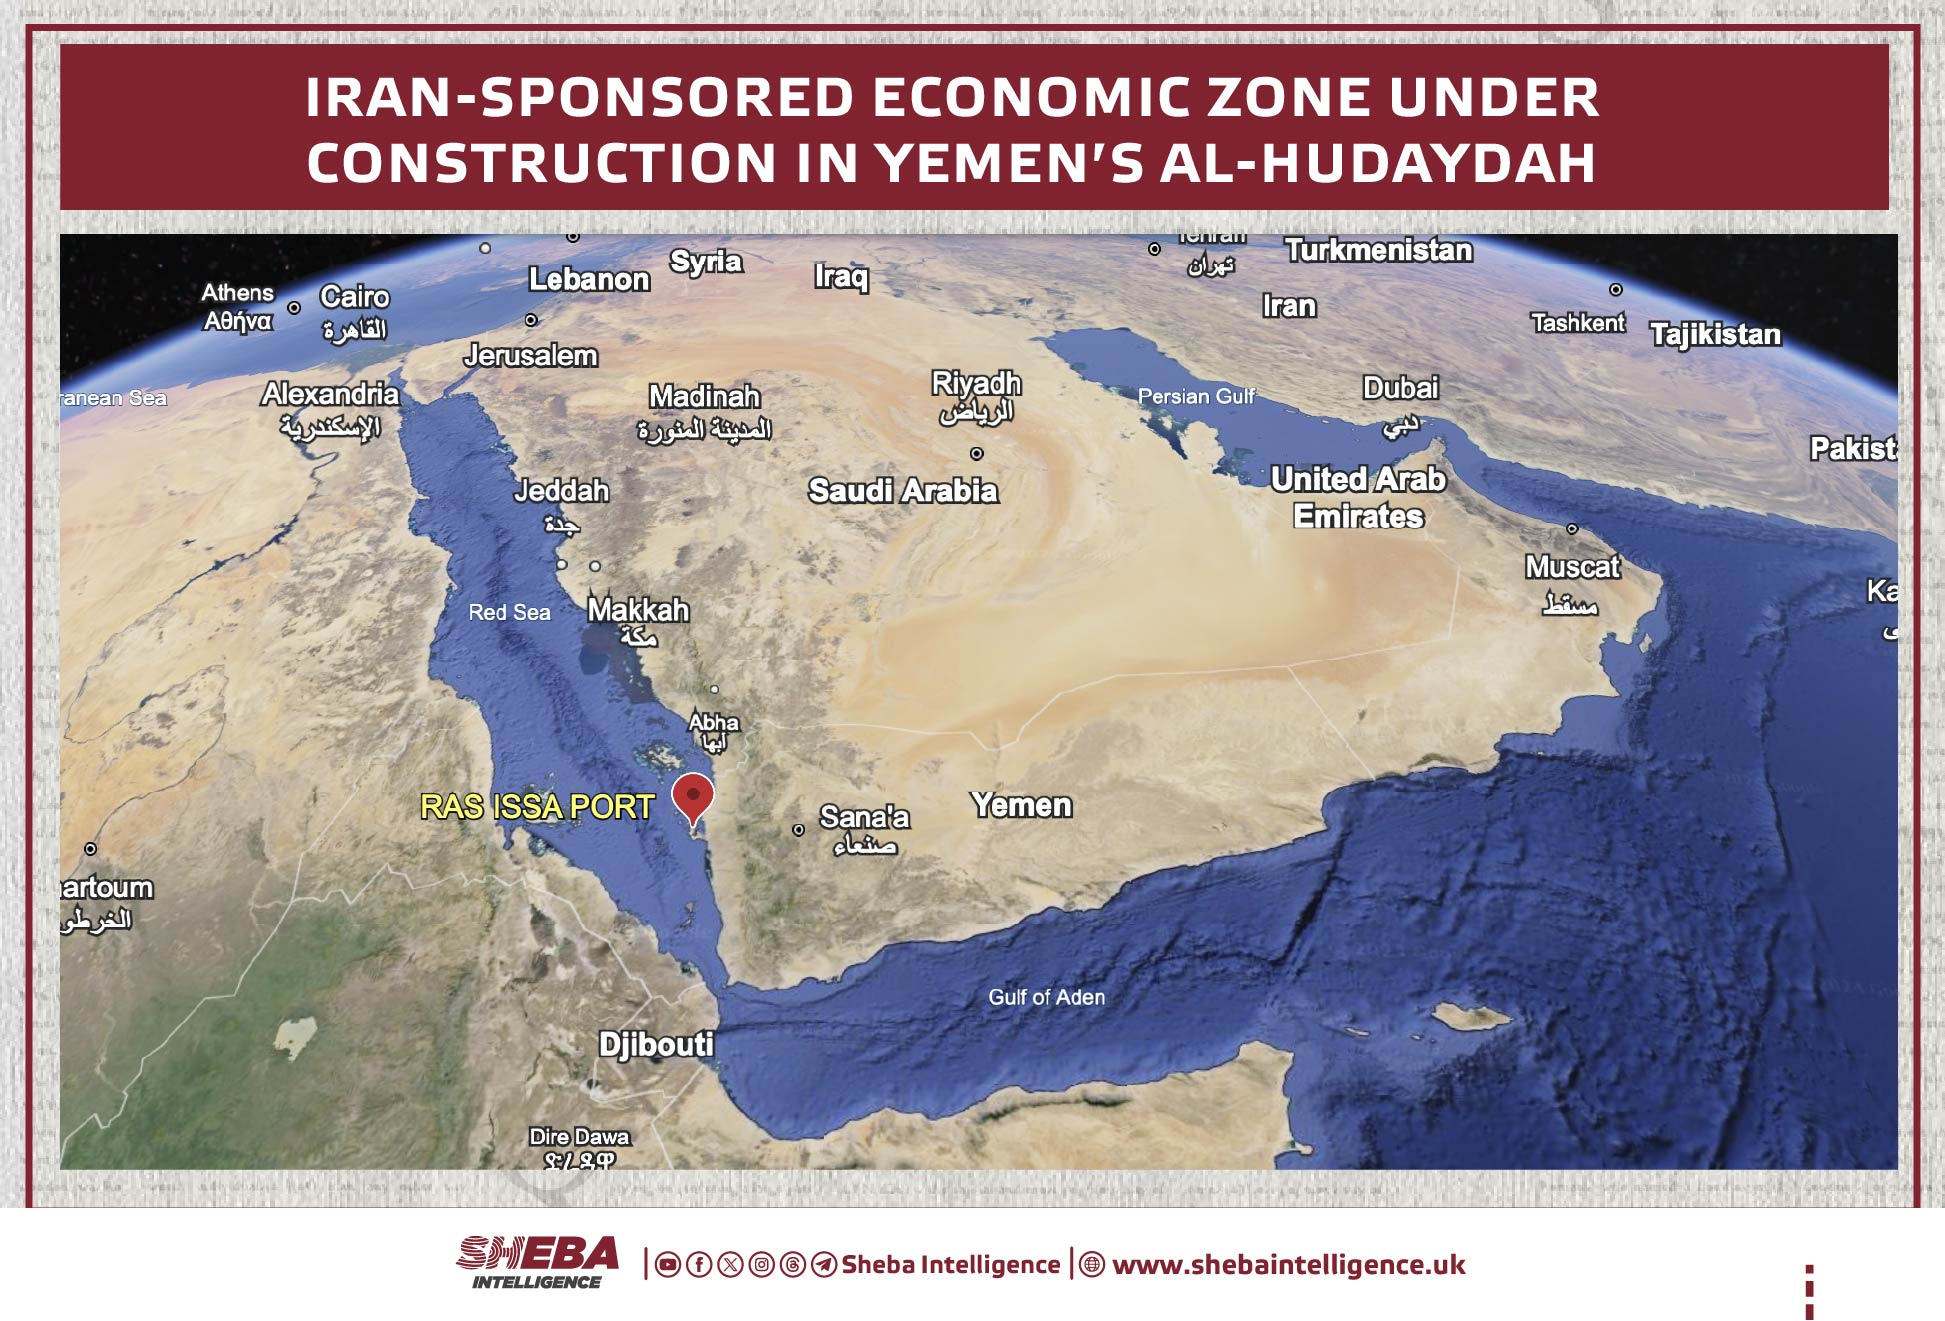 Iran-Sponsored Economic Zone Under Construction in Yemen's Al-Hudaydah